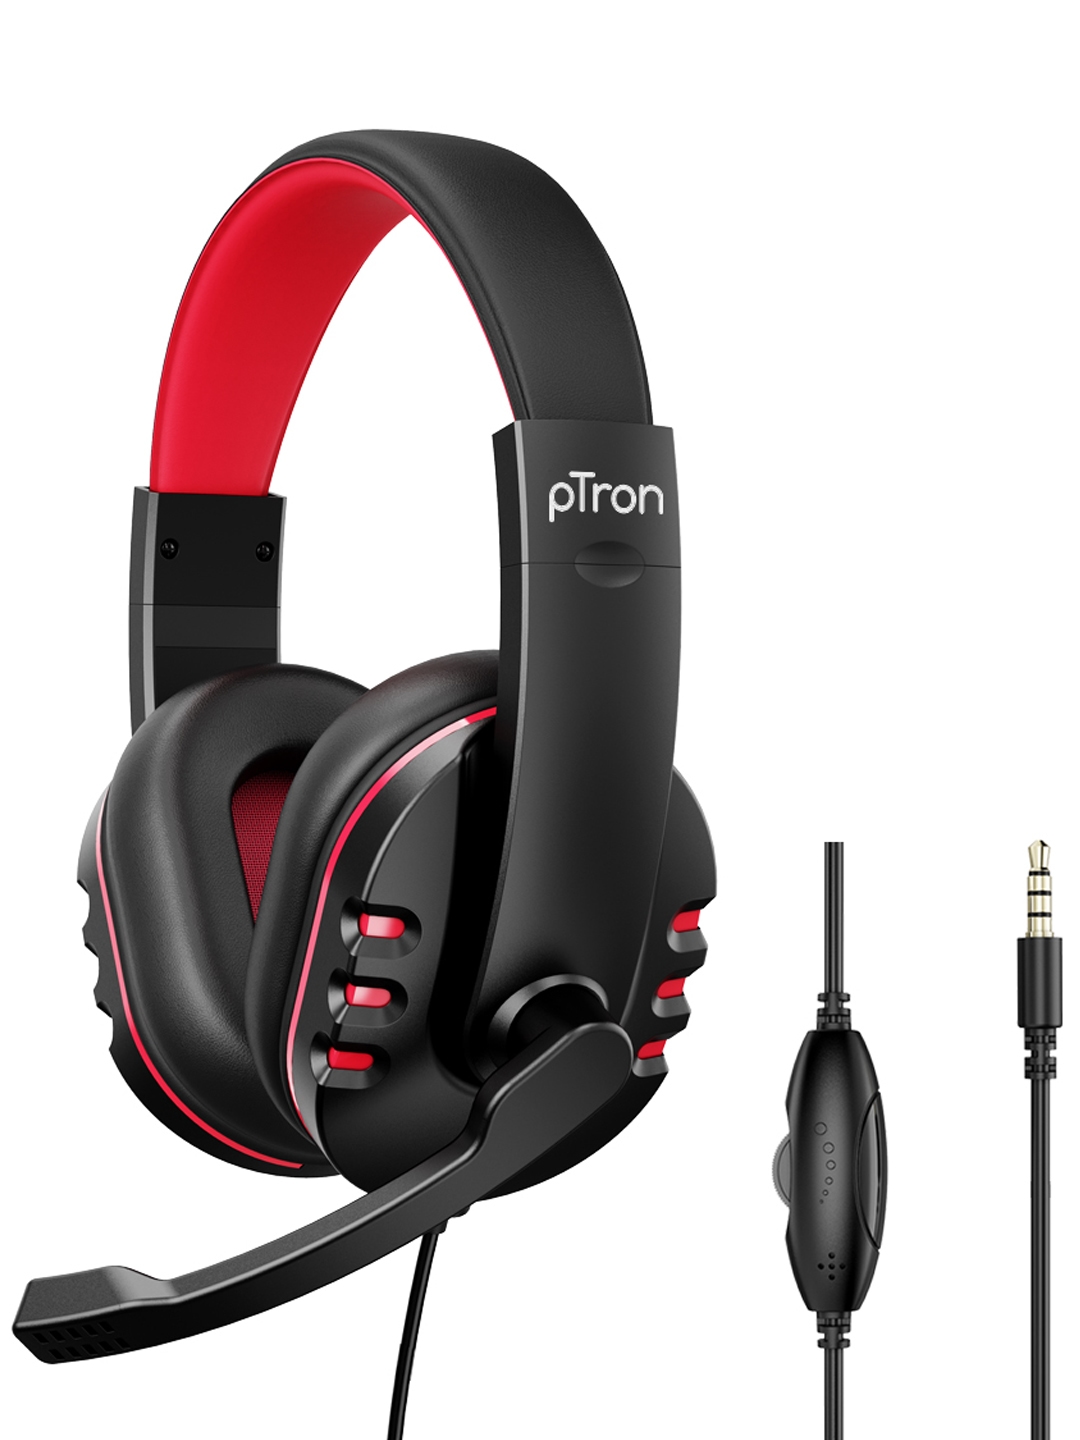 pTron Black   Red Soundster Arcade Ergonomic Wired Headphones